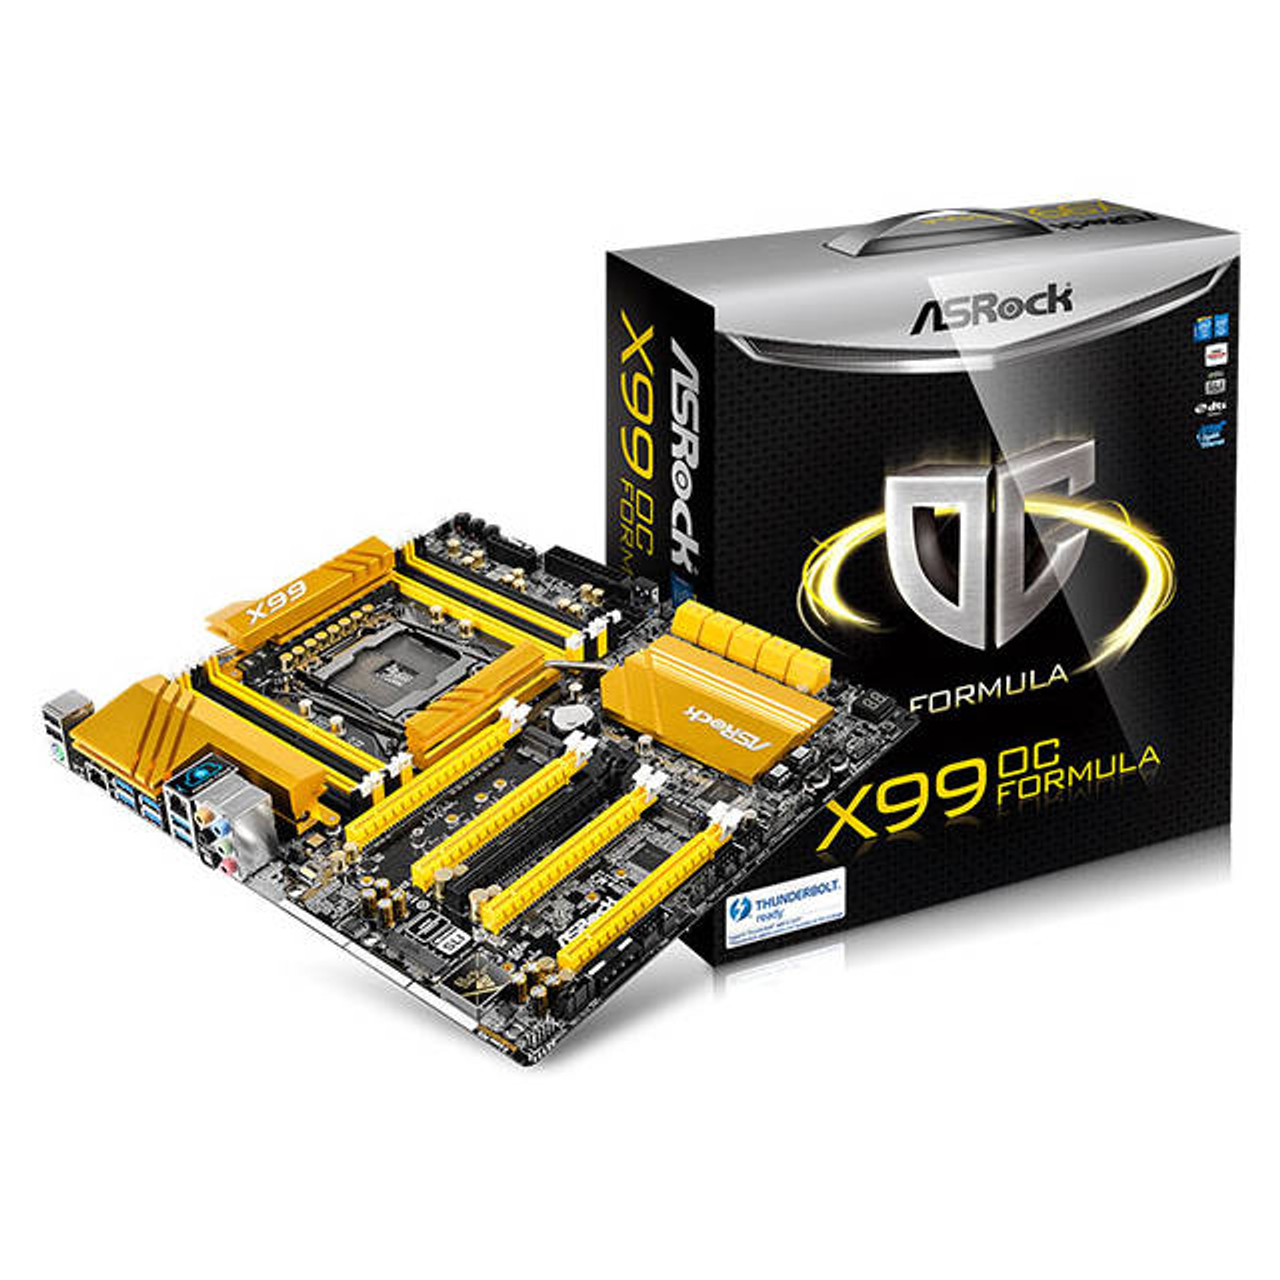 ASRock X99 OC FORMULA LGA2011-v3/ Intel X99/ DDR4/ Quad CrossFireX & Quad SLI/ SATA3&USB3.0/ M.2/ A&2GbE/ EATX Motherboard